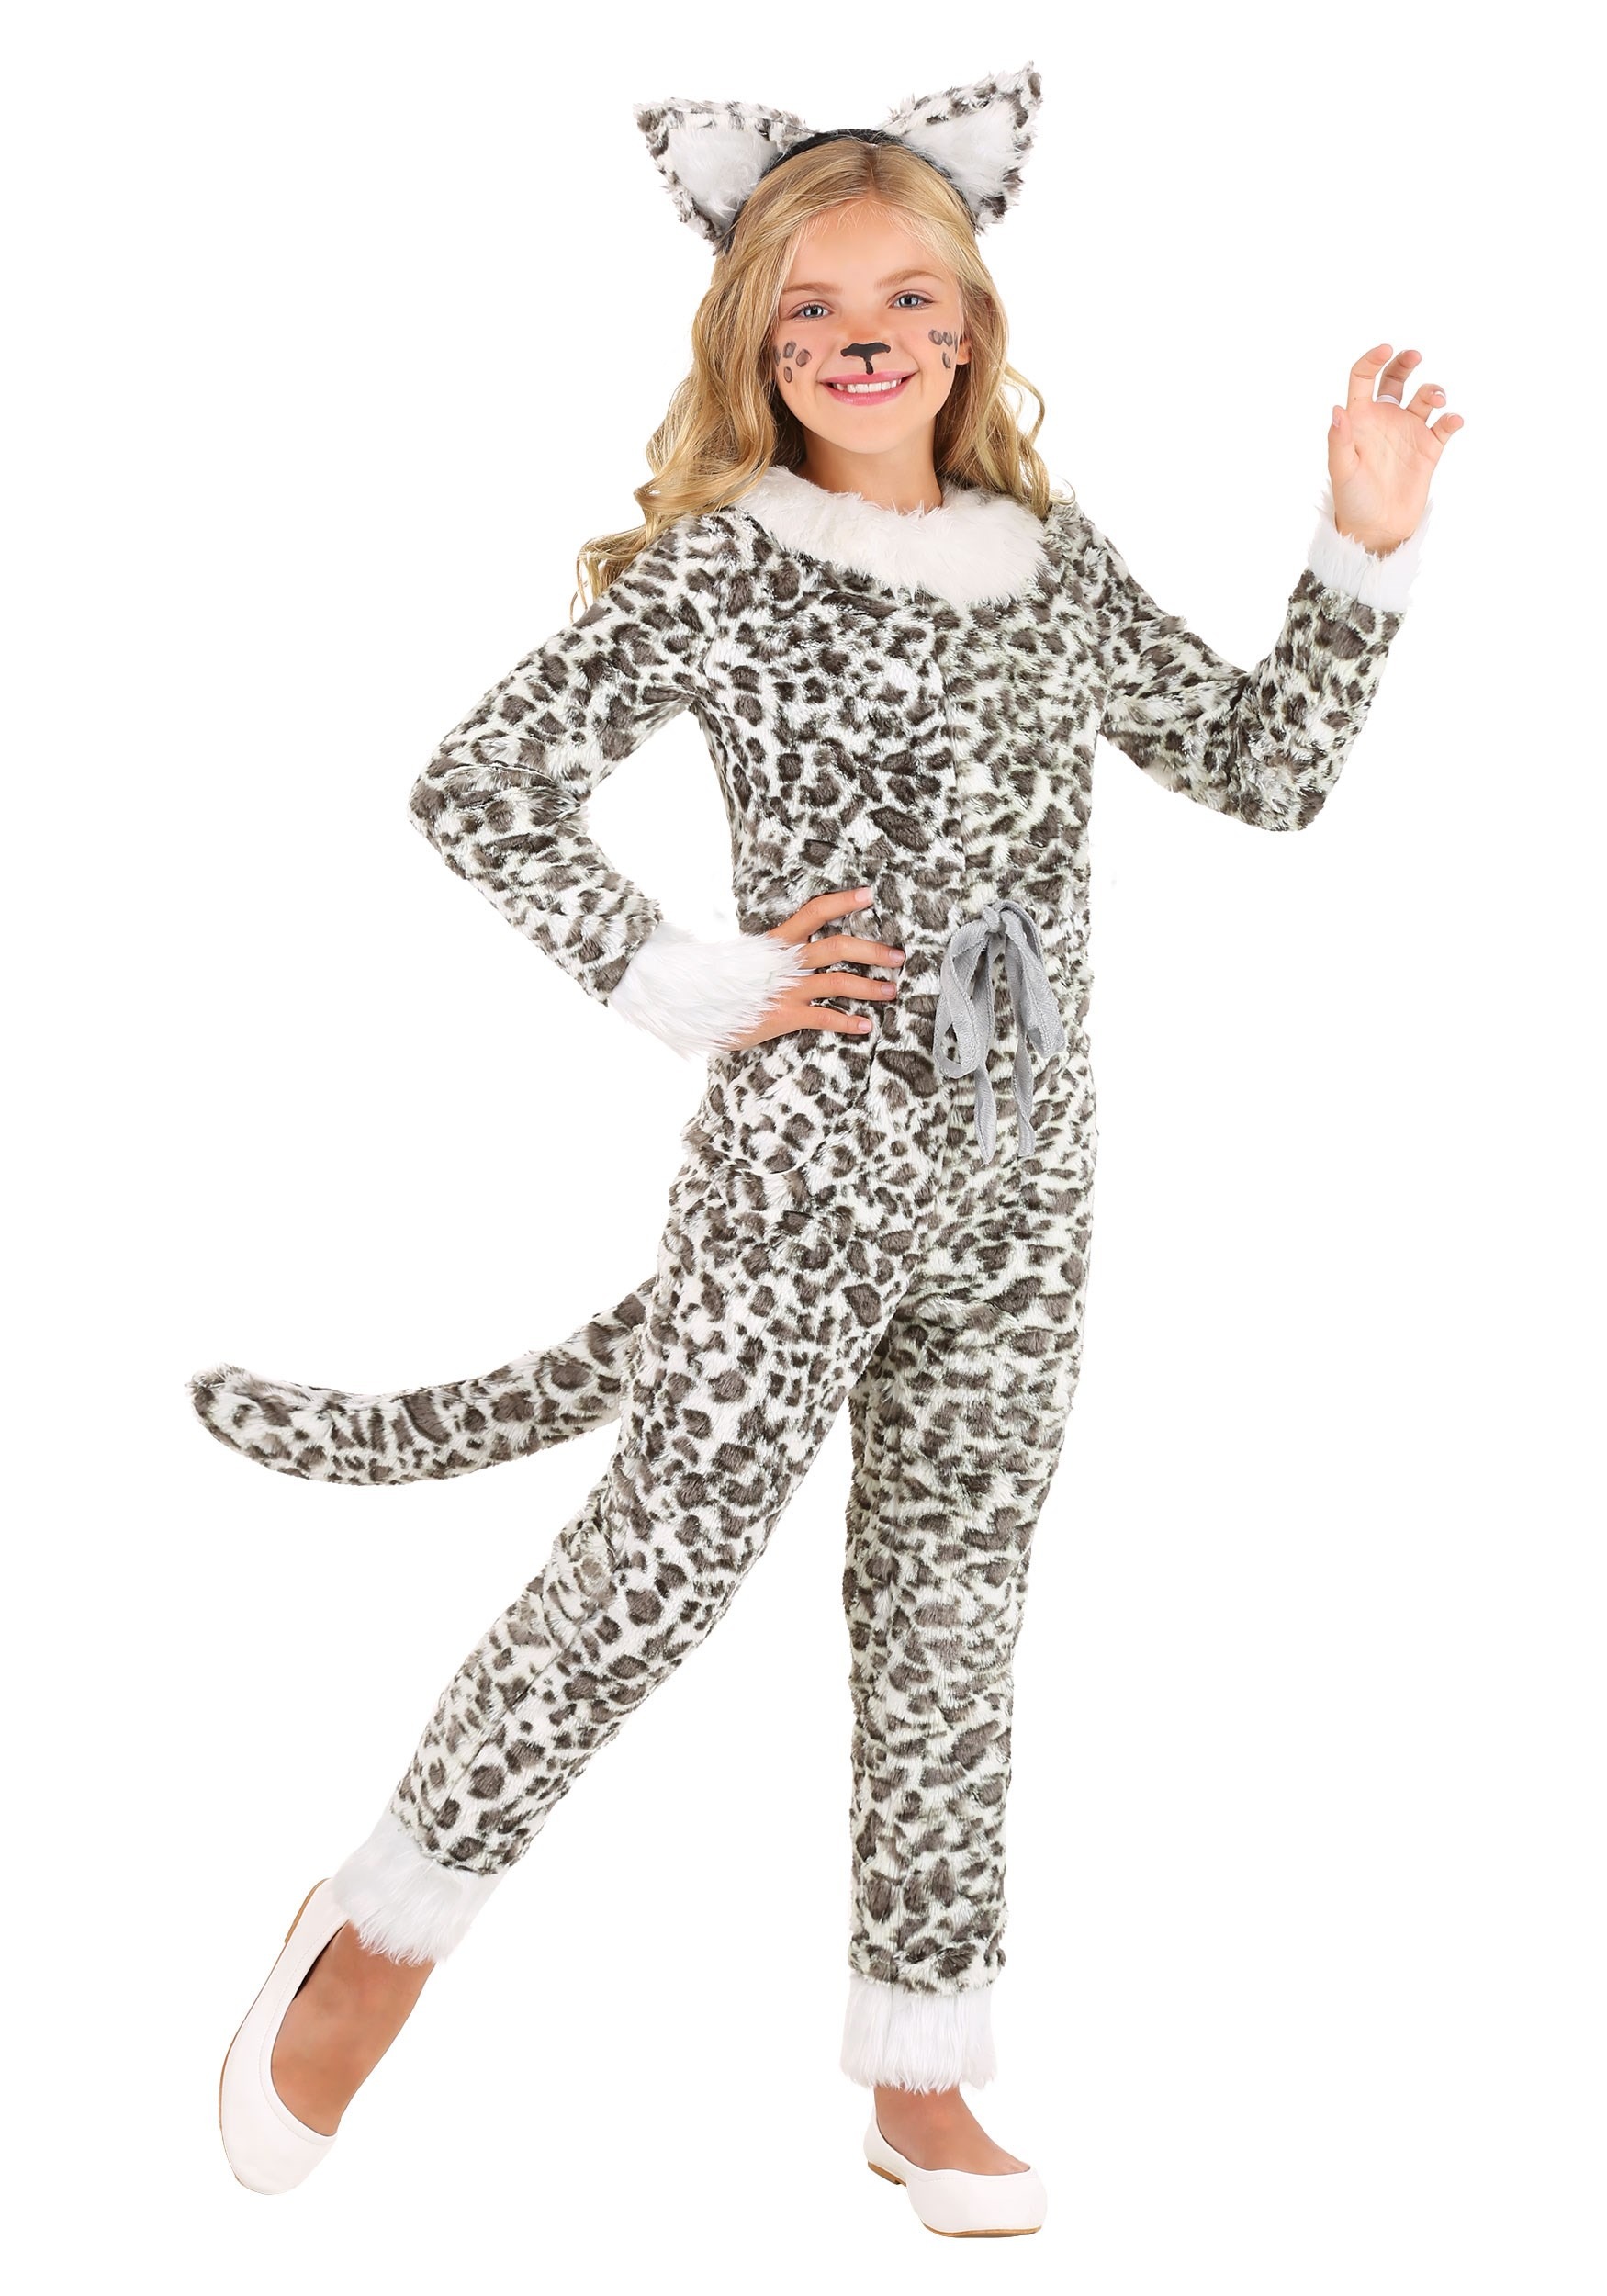 Adelante Accidental tengo sueño Snow Leopard Costume for Girls